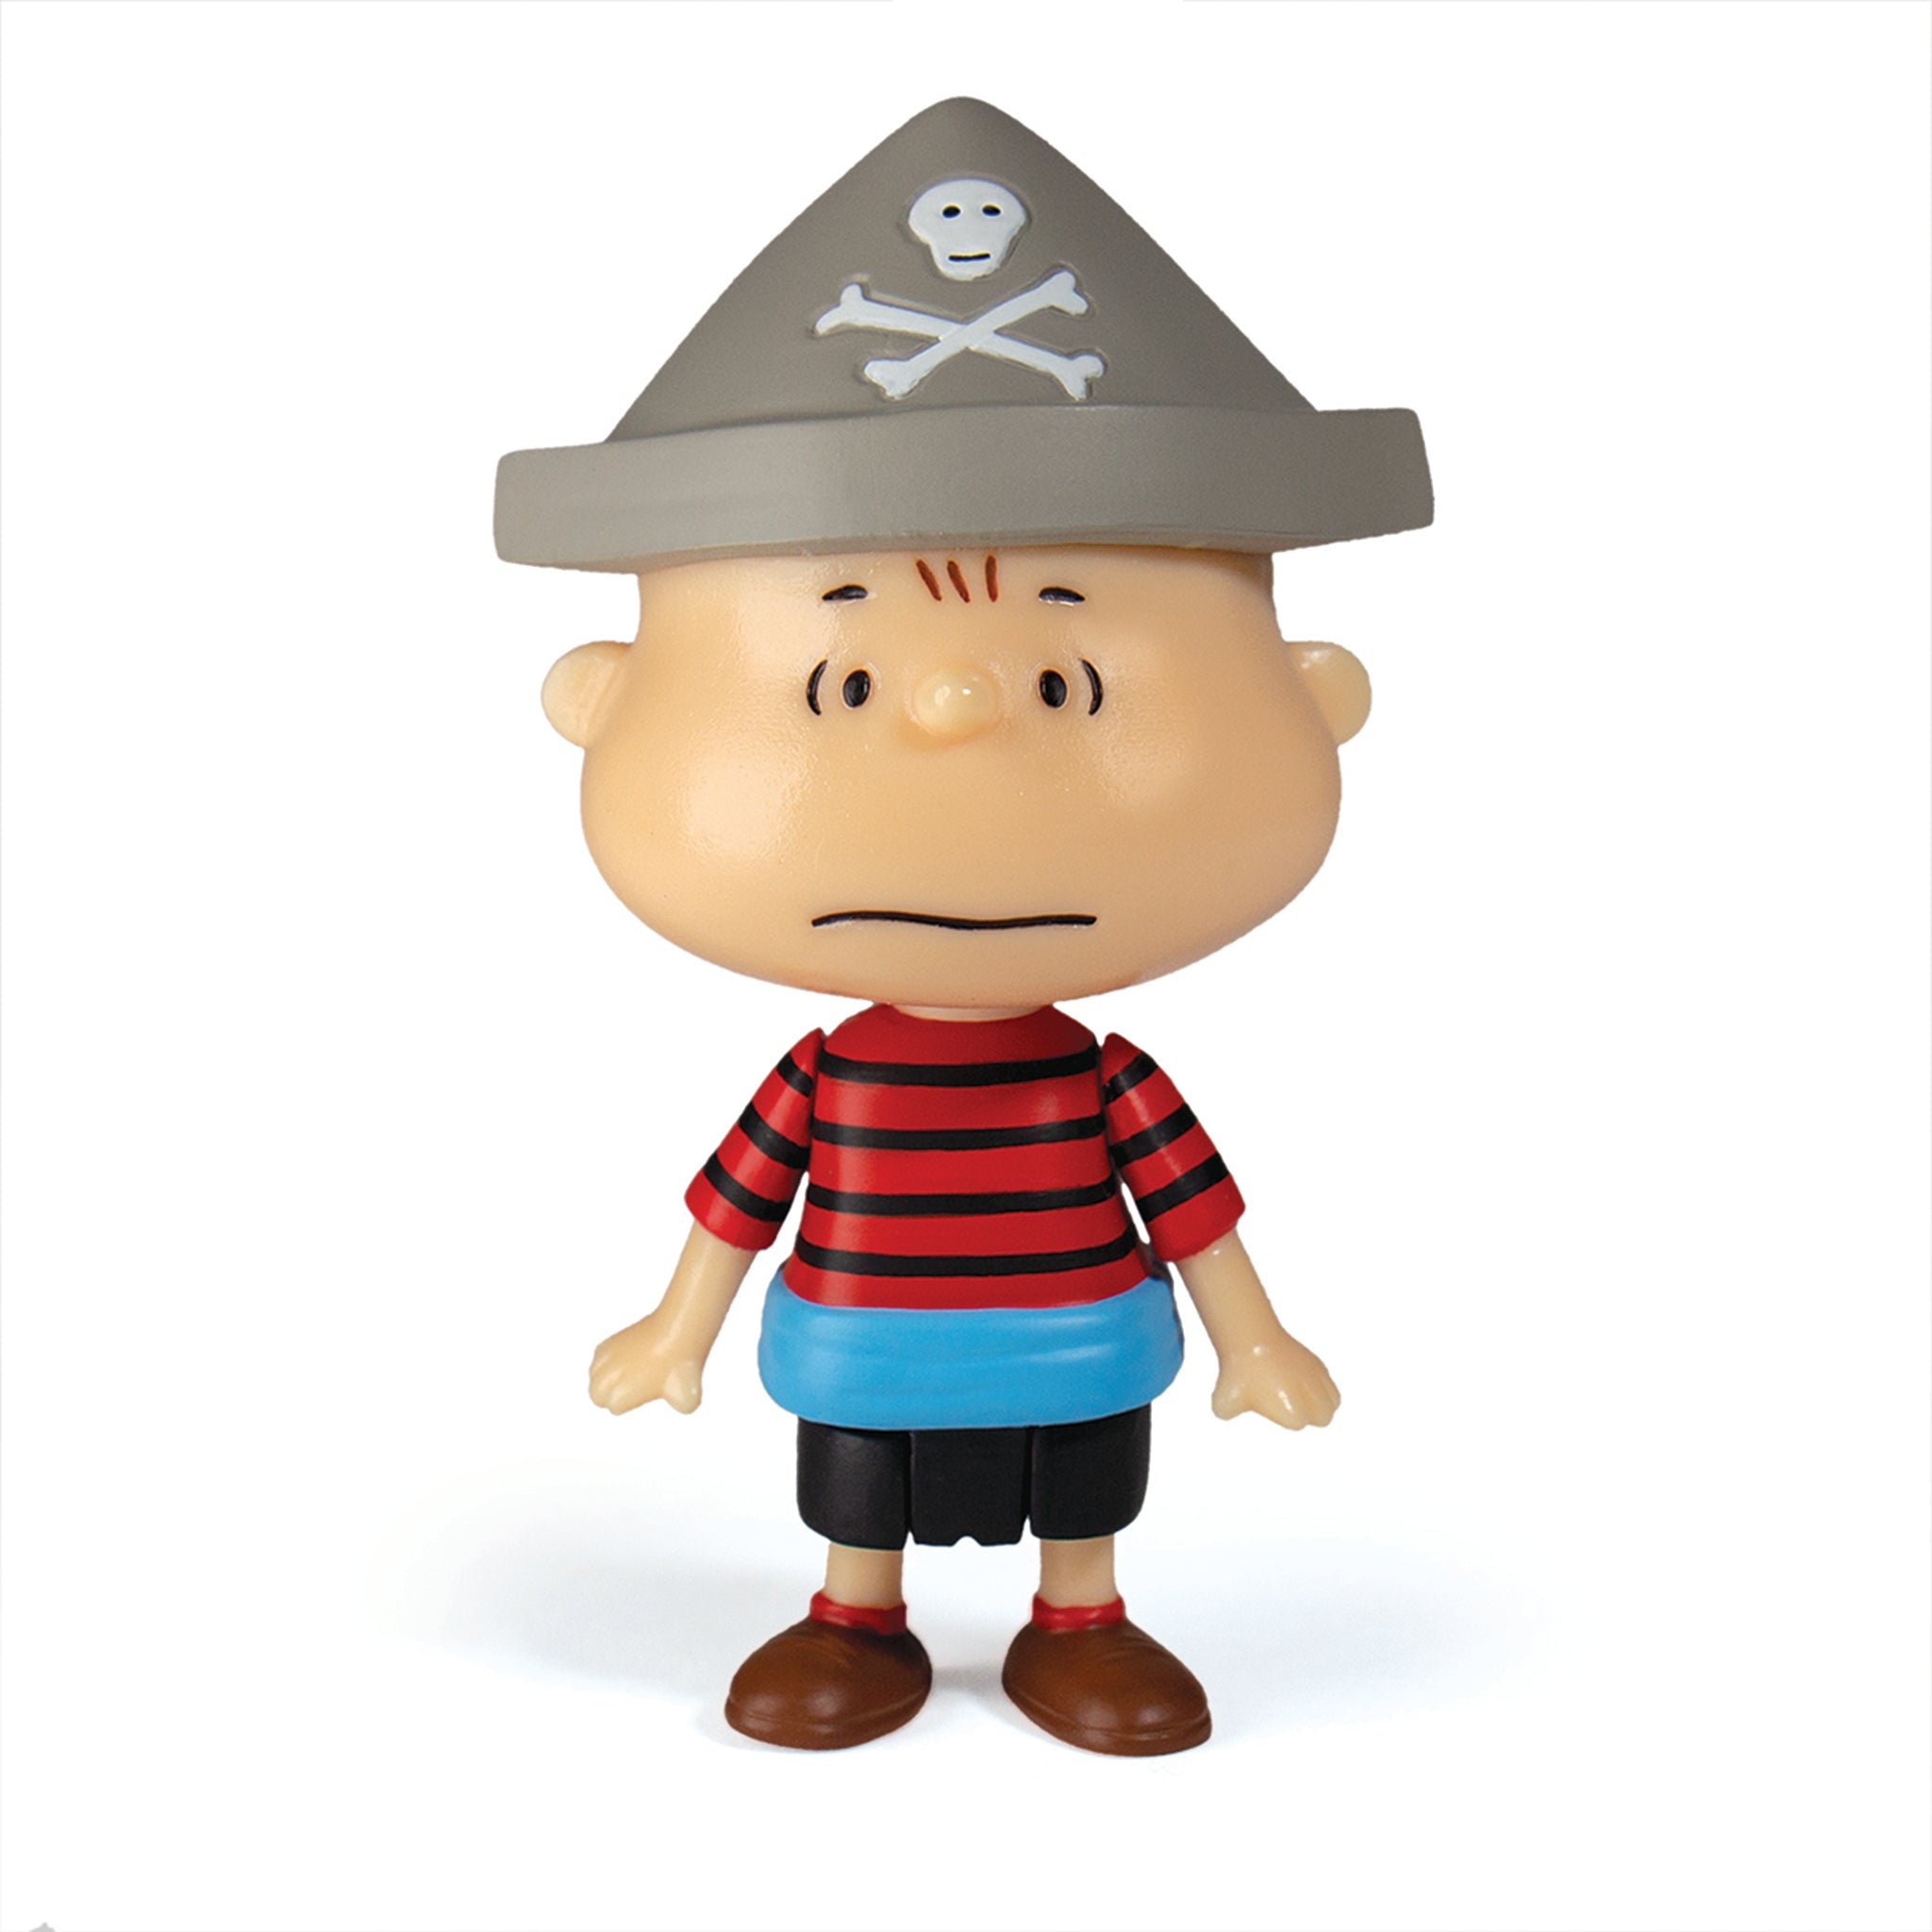 Peanuts ReAction Figure - Pirate Linus